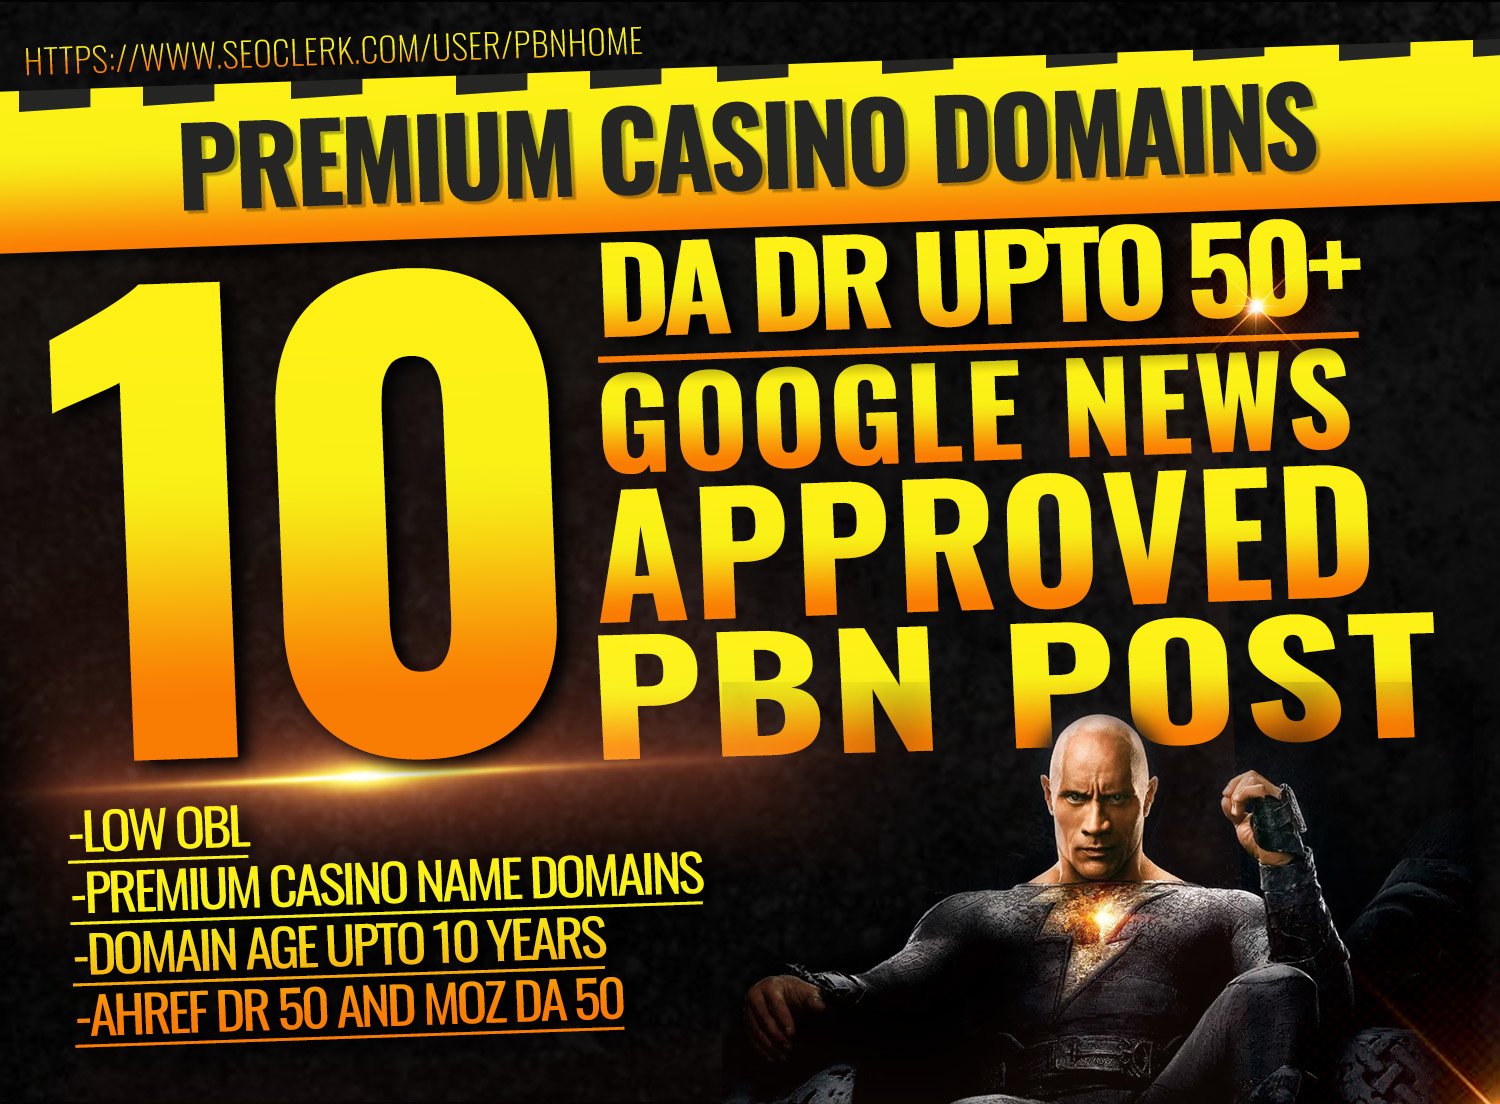 10 Google News Approved Premium Casino Domains PBN Posts DA DR Upto 50+